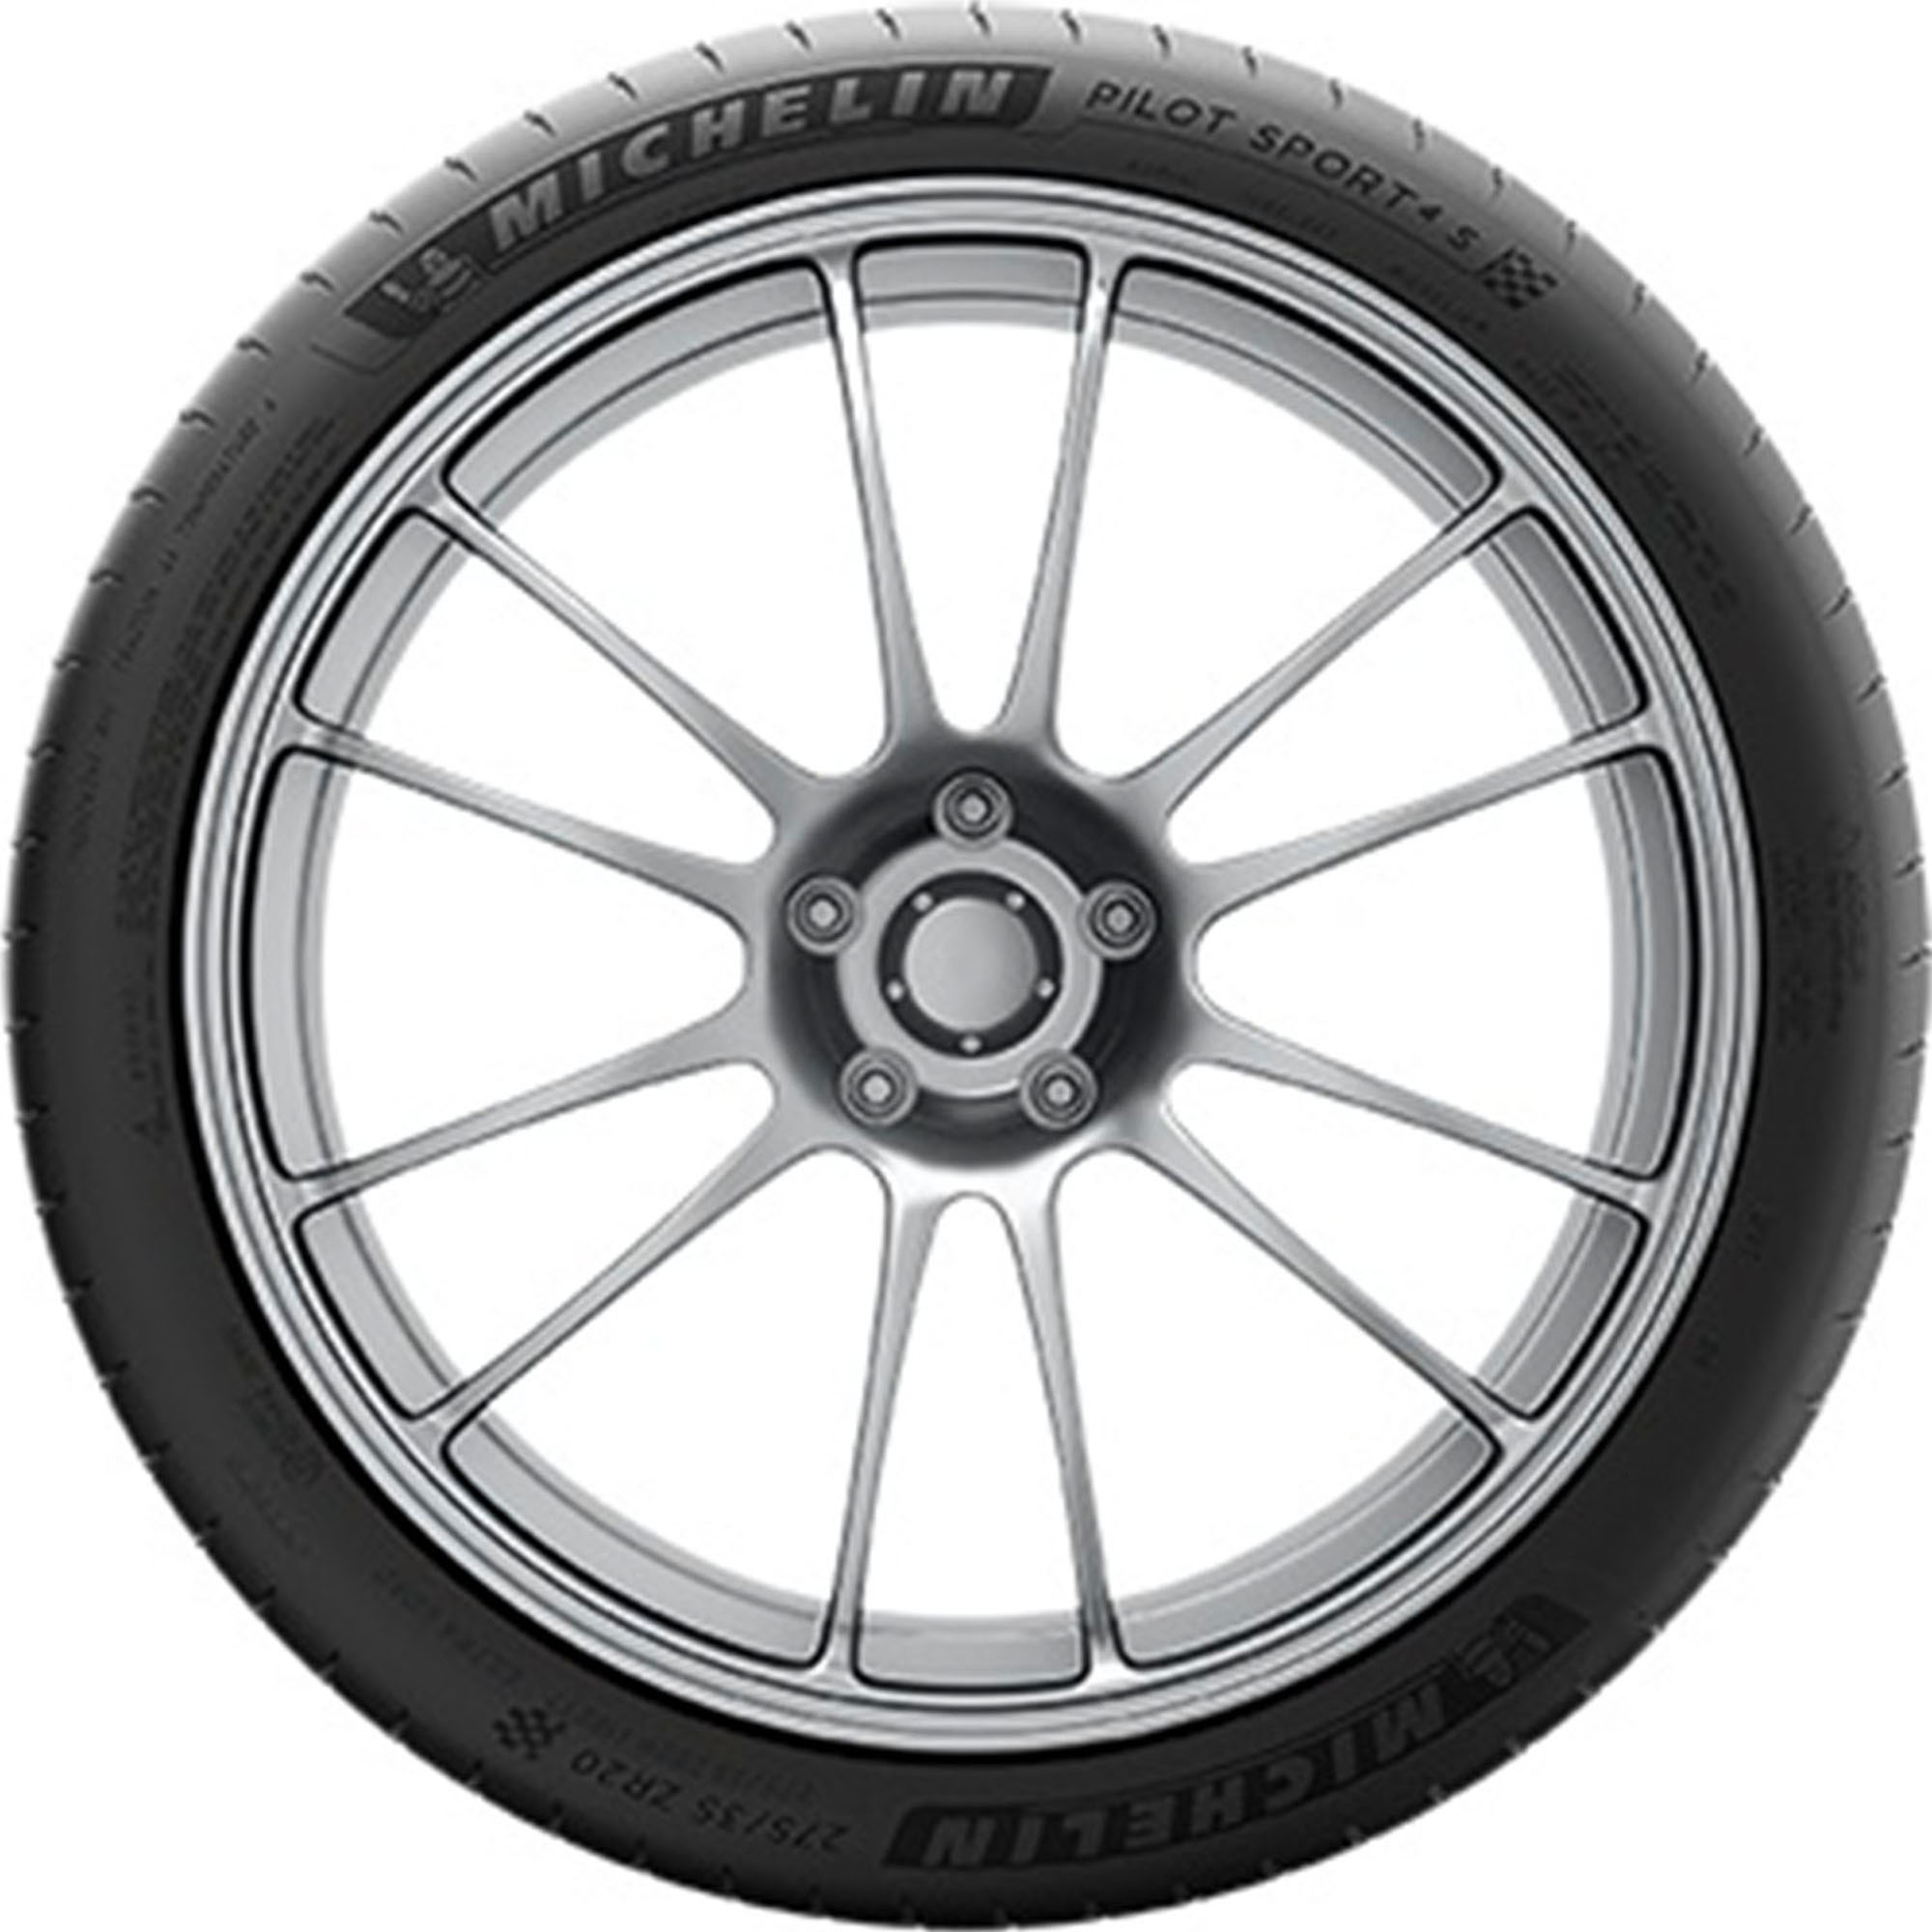 Michelin Pilot Sport 4S Performance 235/35ZR19 (91Y) XL Passenger Tire - image 2 of 4